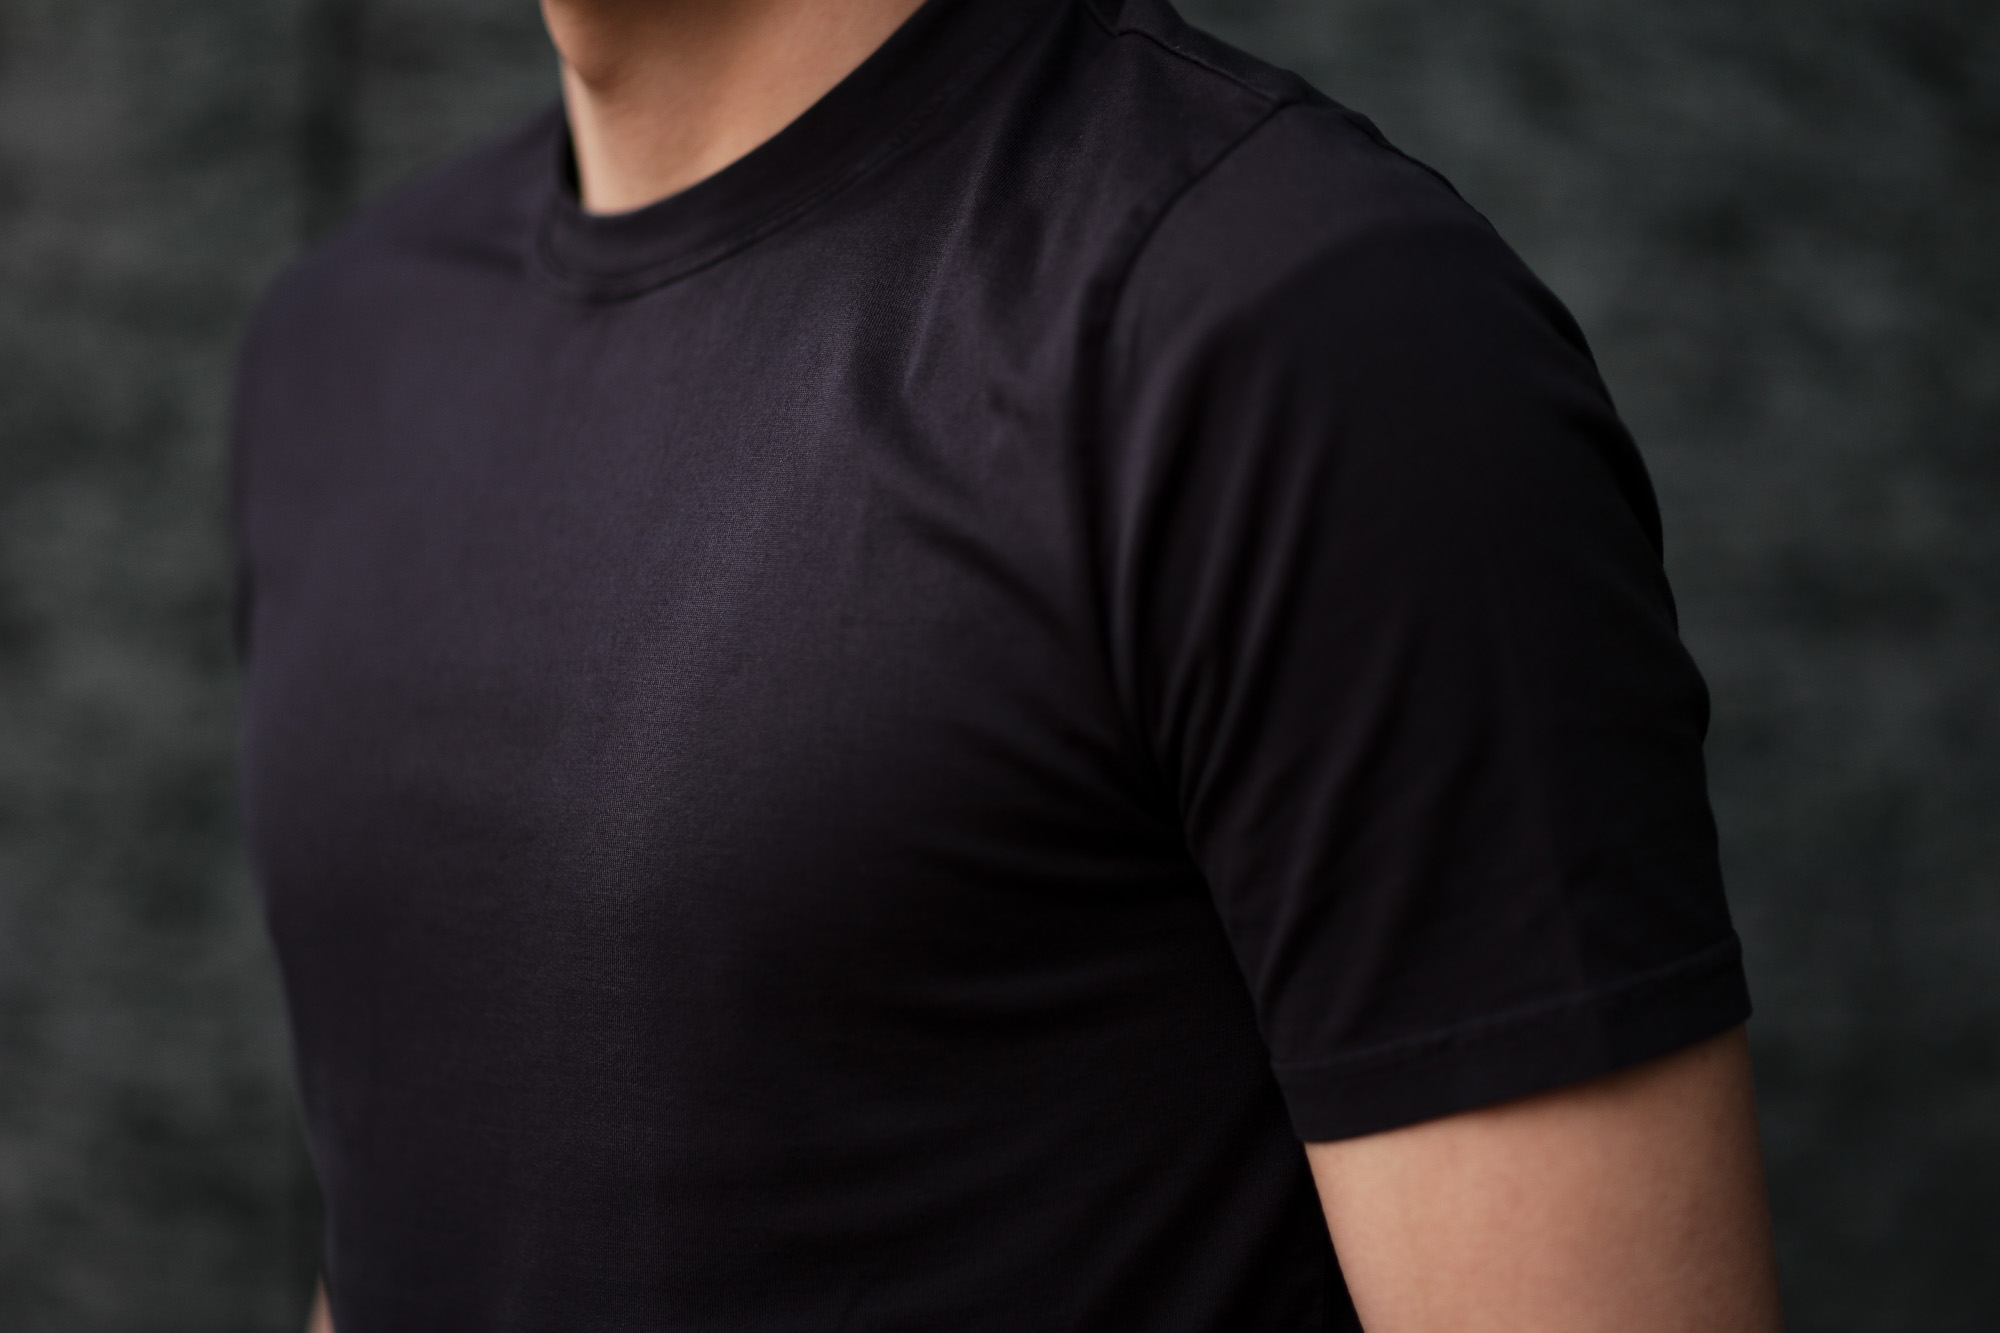 FEDELI(フェデーリ) Crew Neck T-shirt (クルーネック Tシャツ) ギザコットン Tシャツ BLACK (ブラック・36) made in italy (イタリア製) 2020 春夏新作 愛知 名古屋 altoediritto アルトエデリット TEE